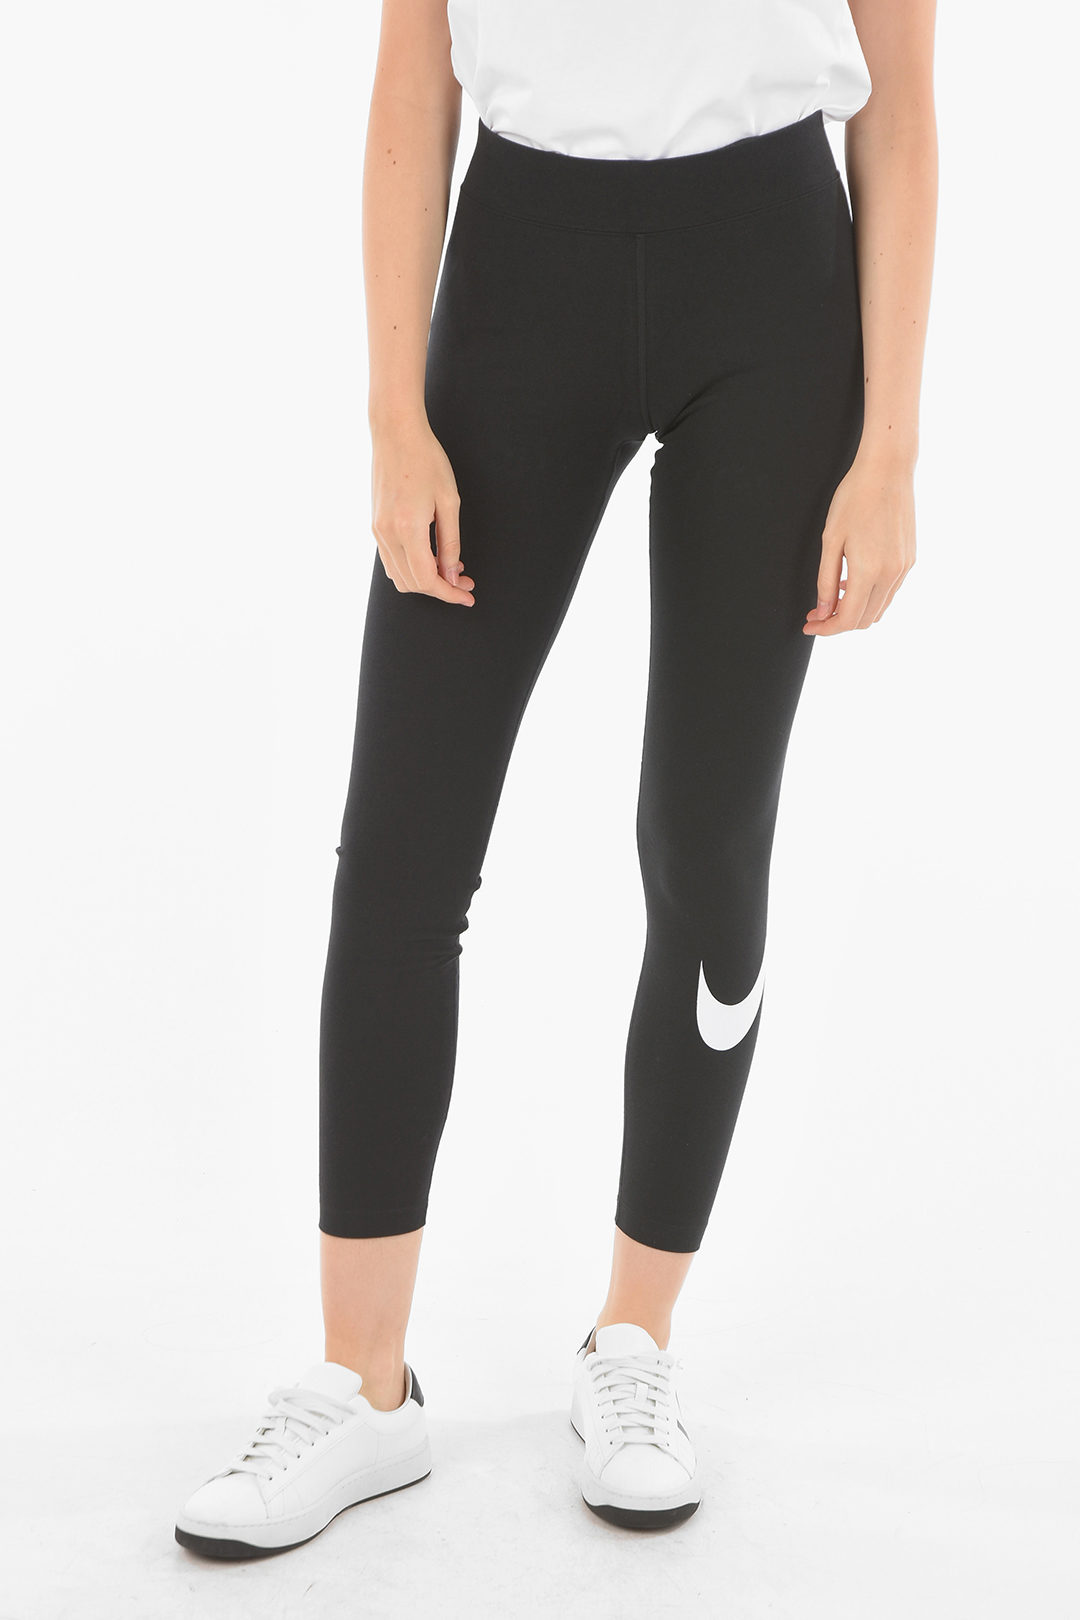 Nike Logo Printed Tight Fit Leggings women - Glamood Outlet